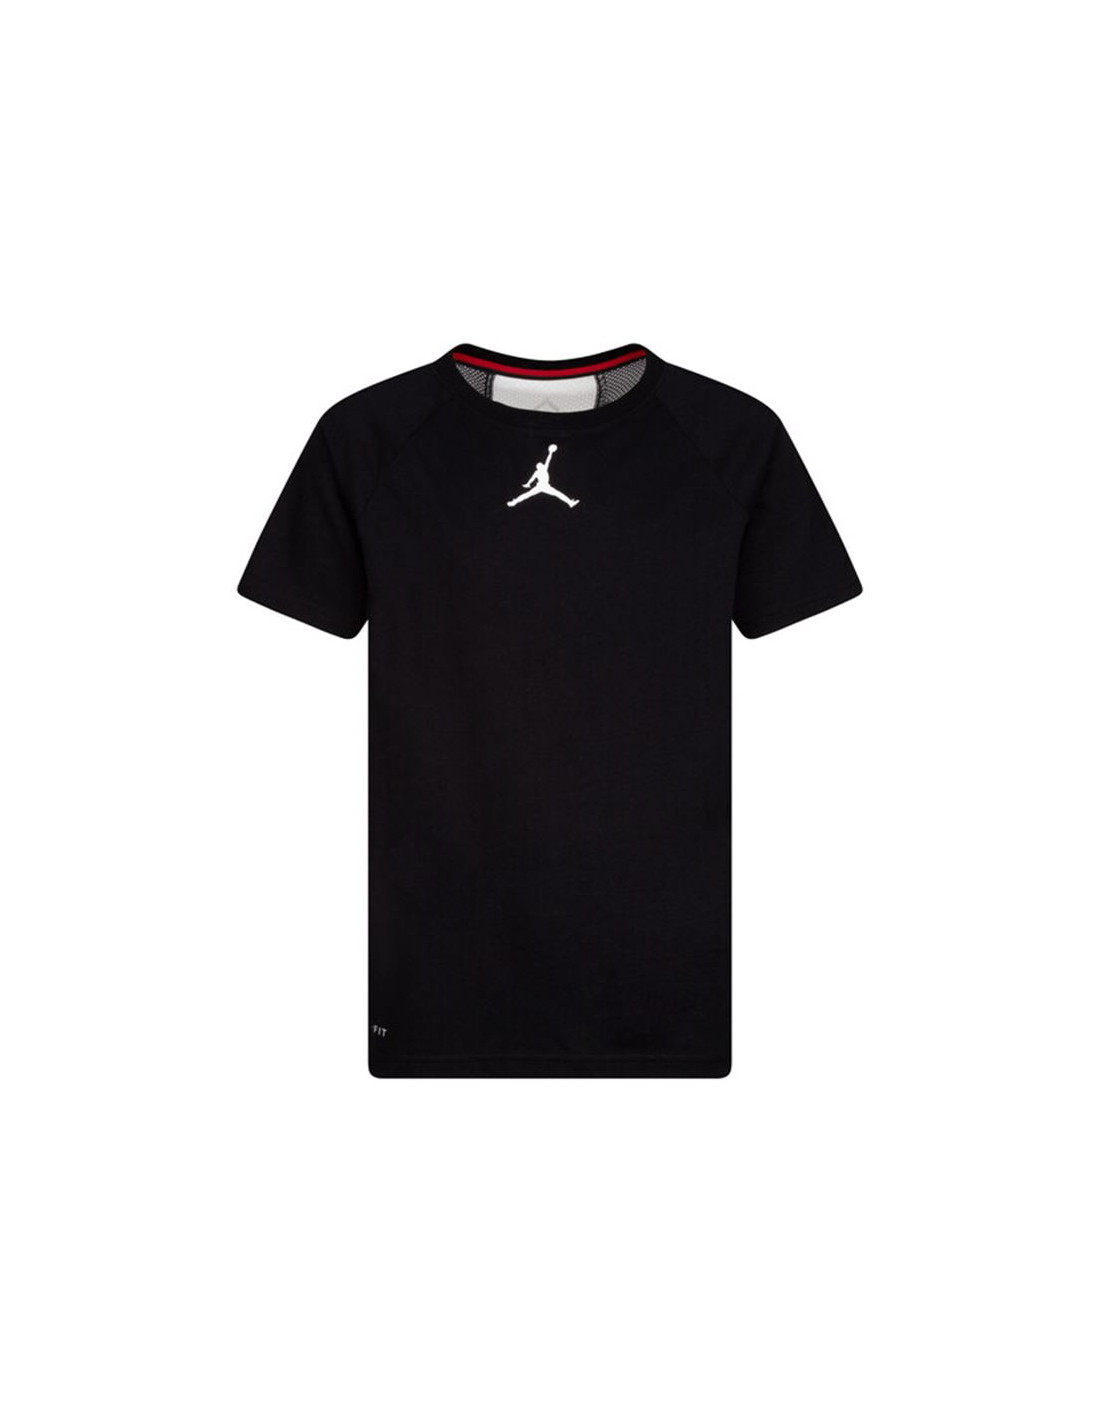 Camiseta nike jordan core performance niño black